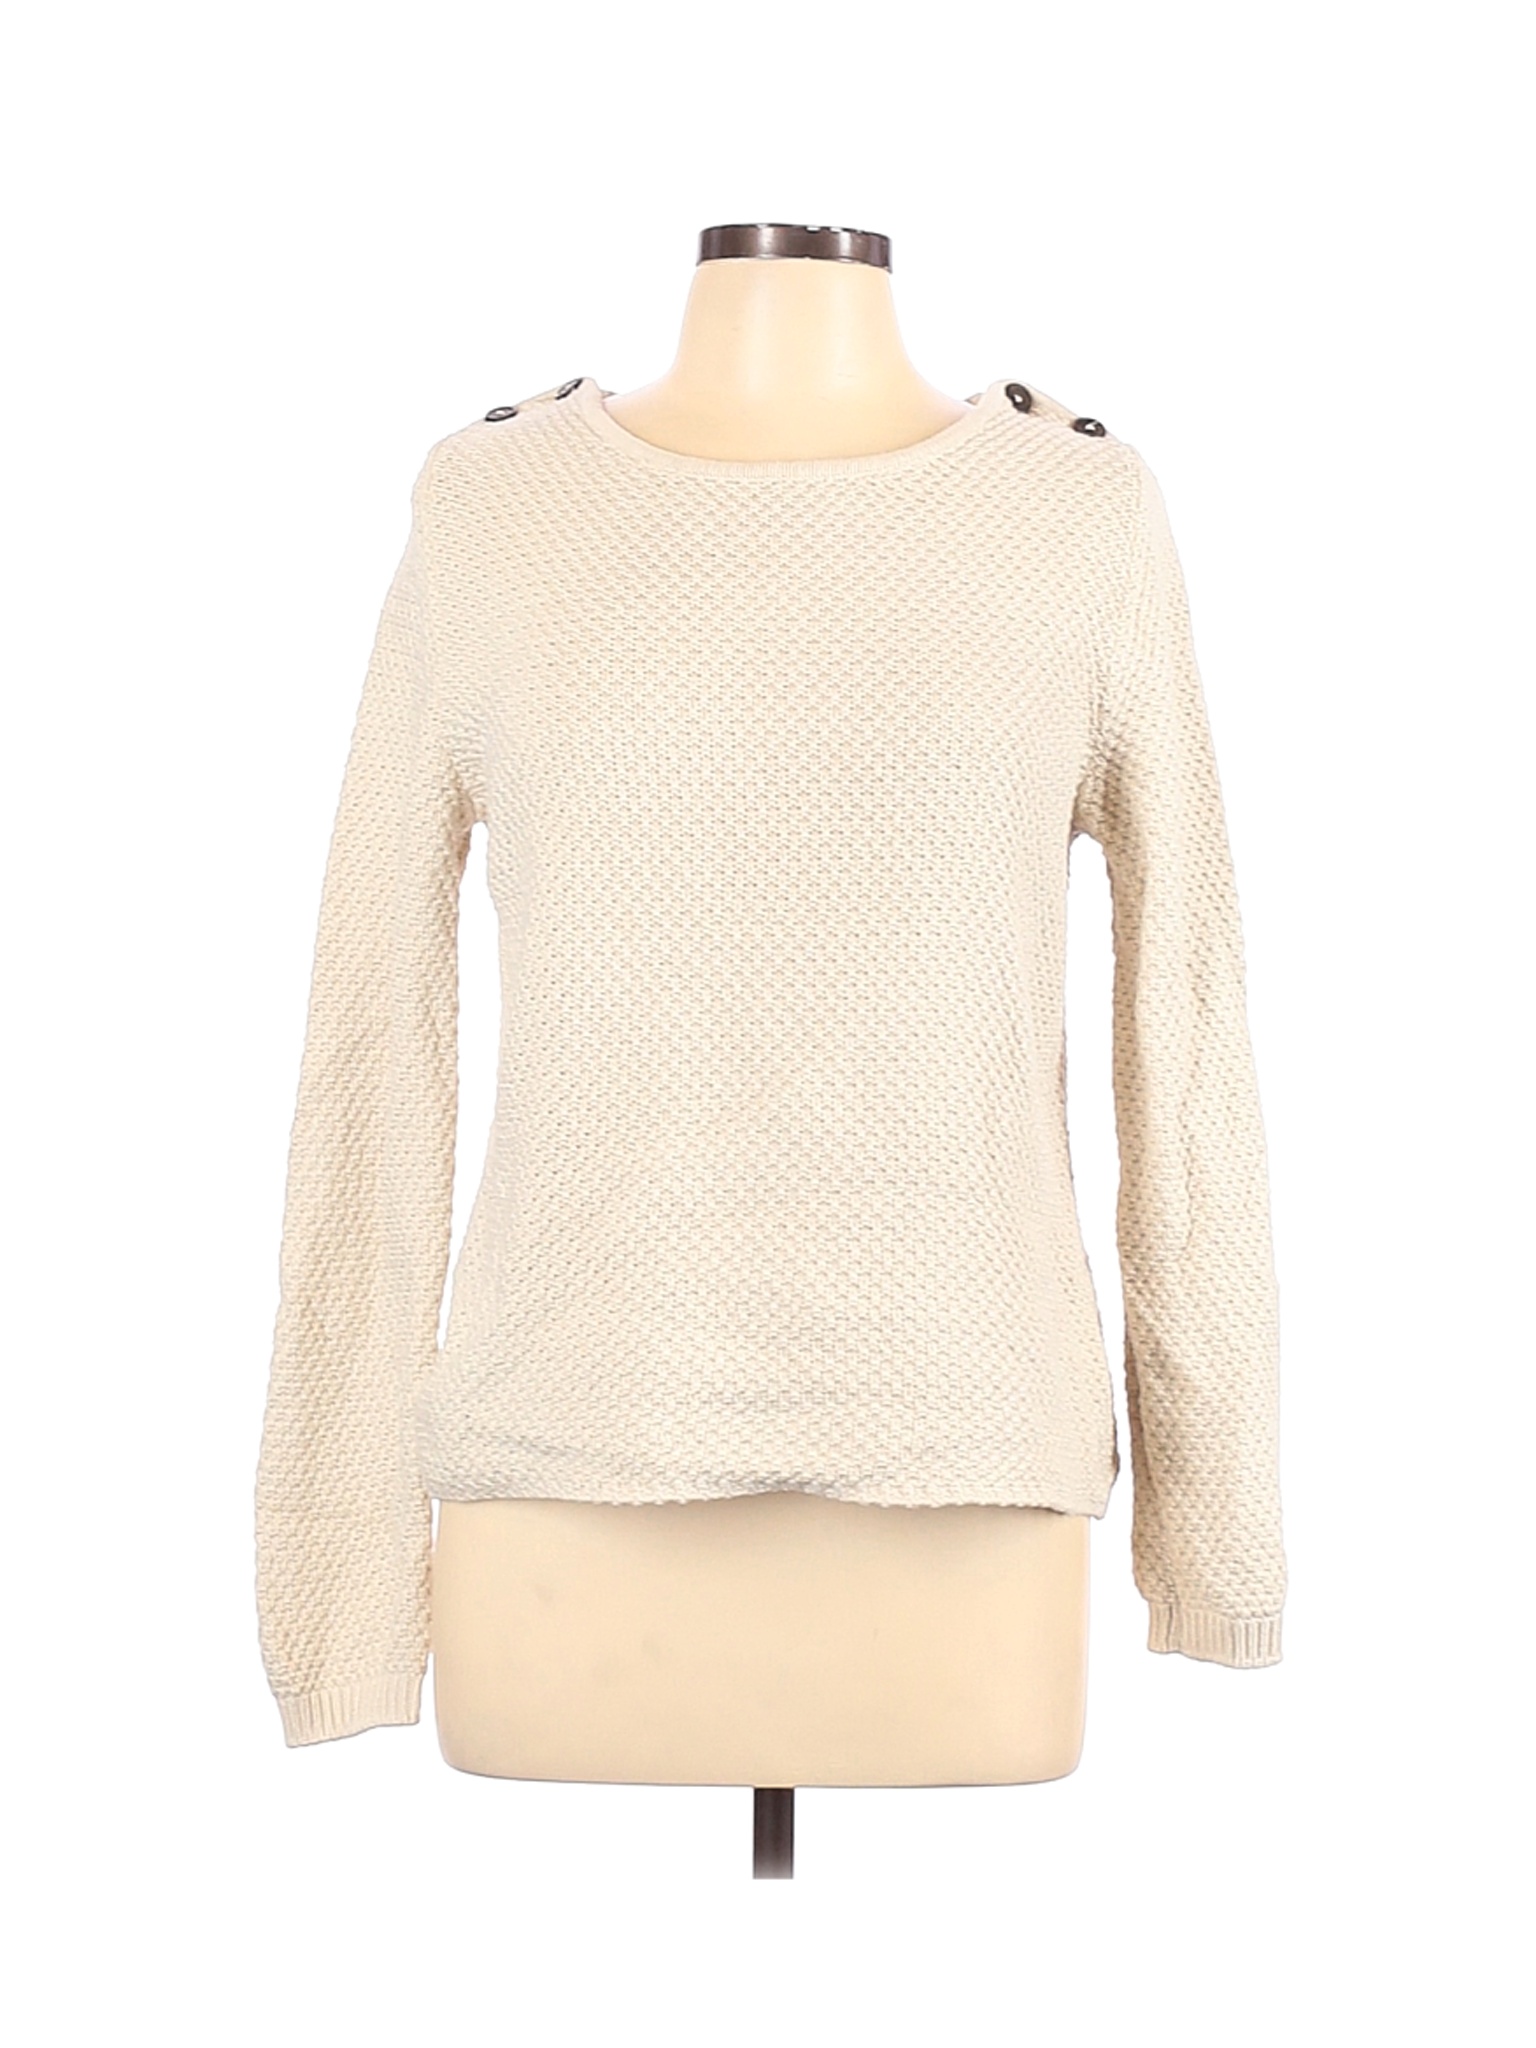 Boden Women Ivory Pullover Sweater 10 | eBay